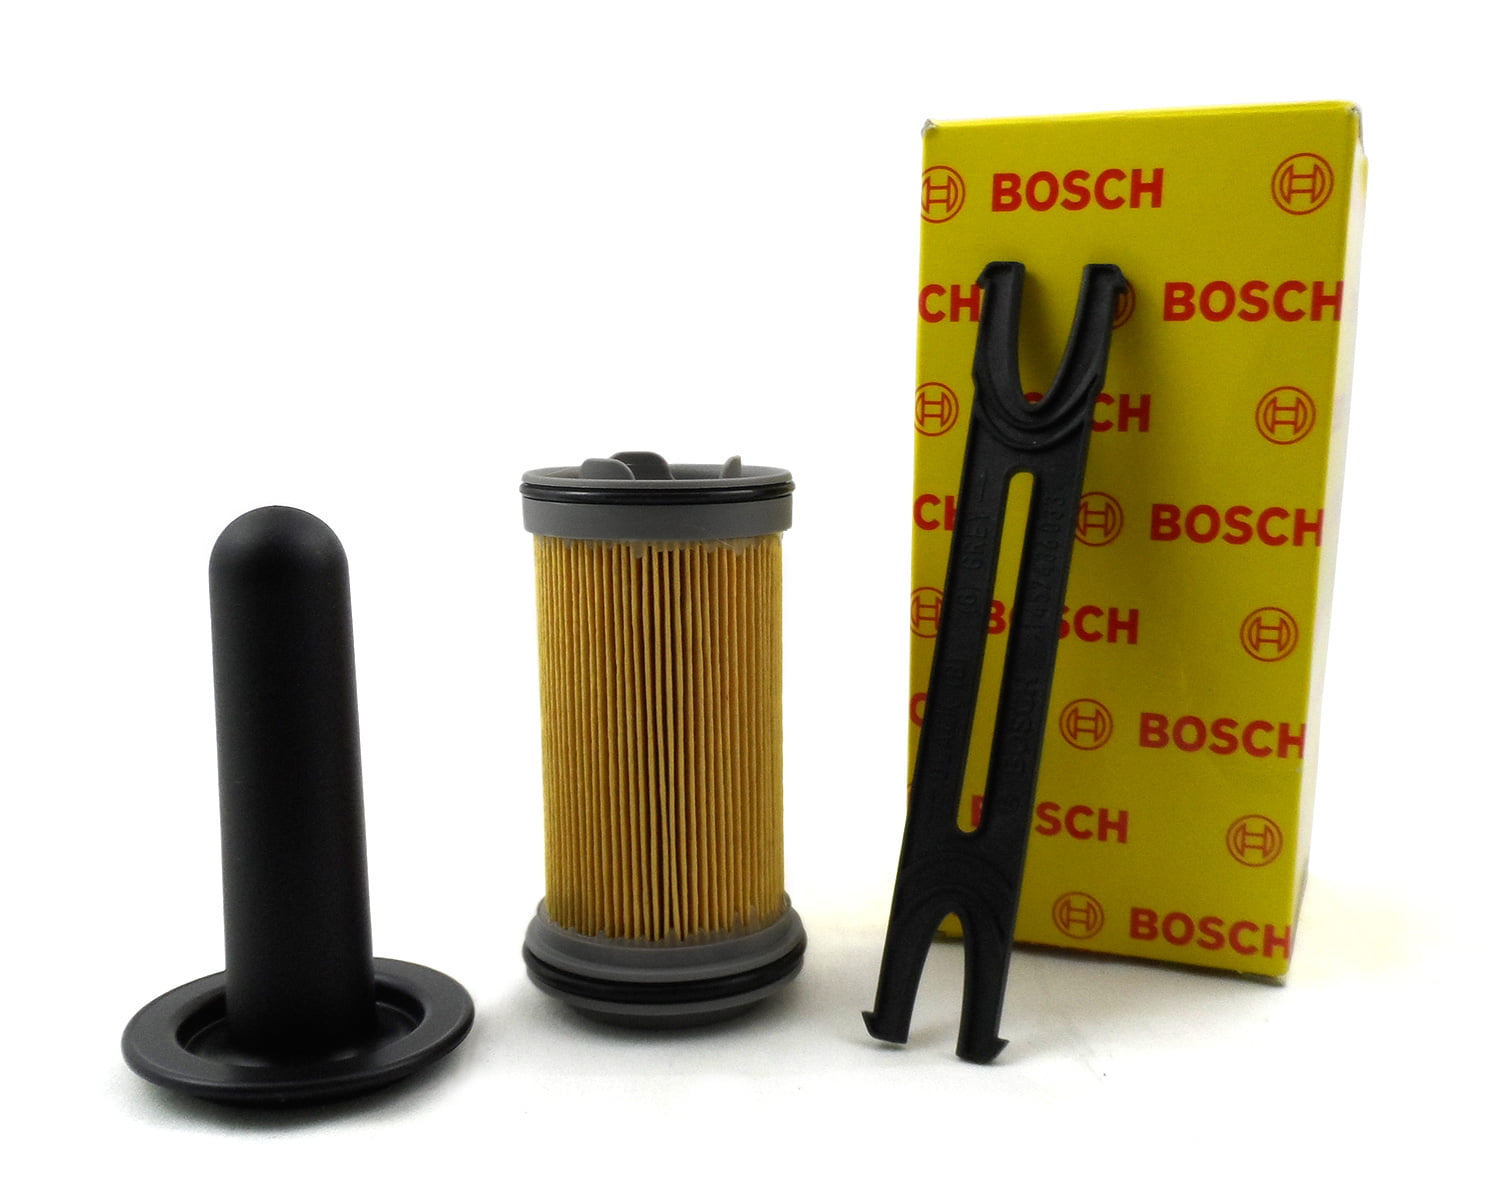 1457436033 Bosch Urea DEF Fluid Filter - Diesel Pro